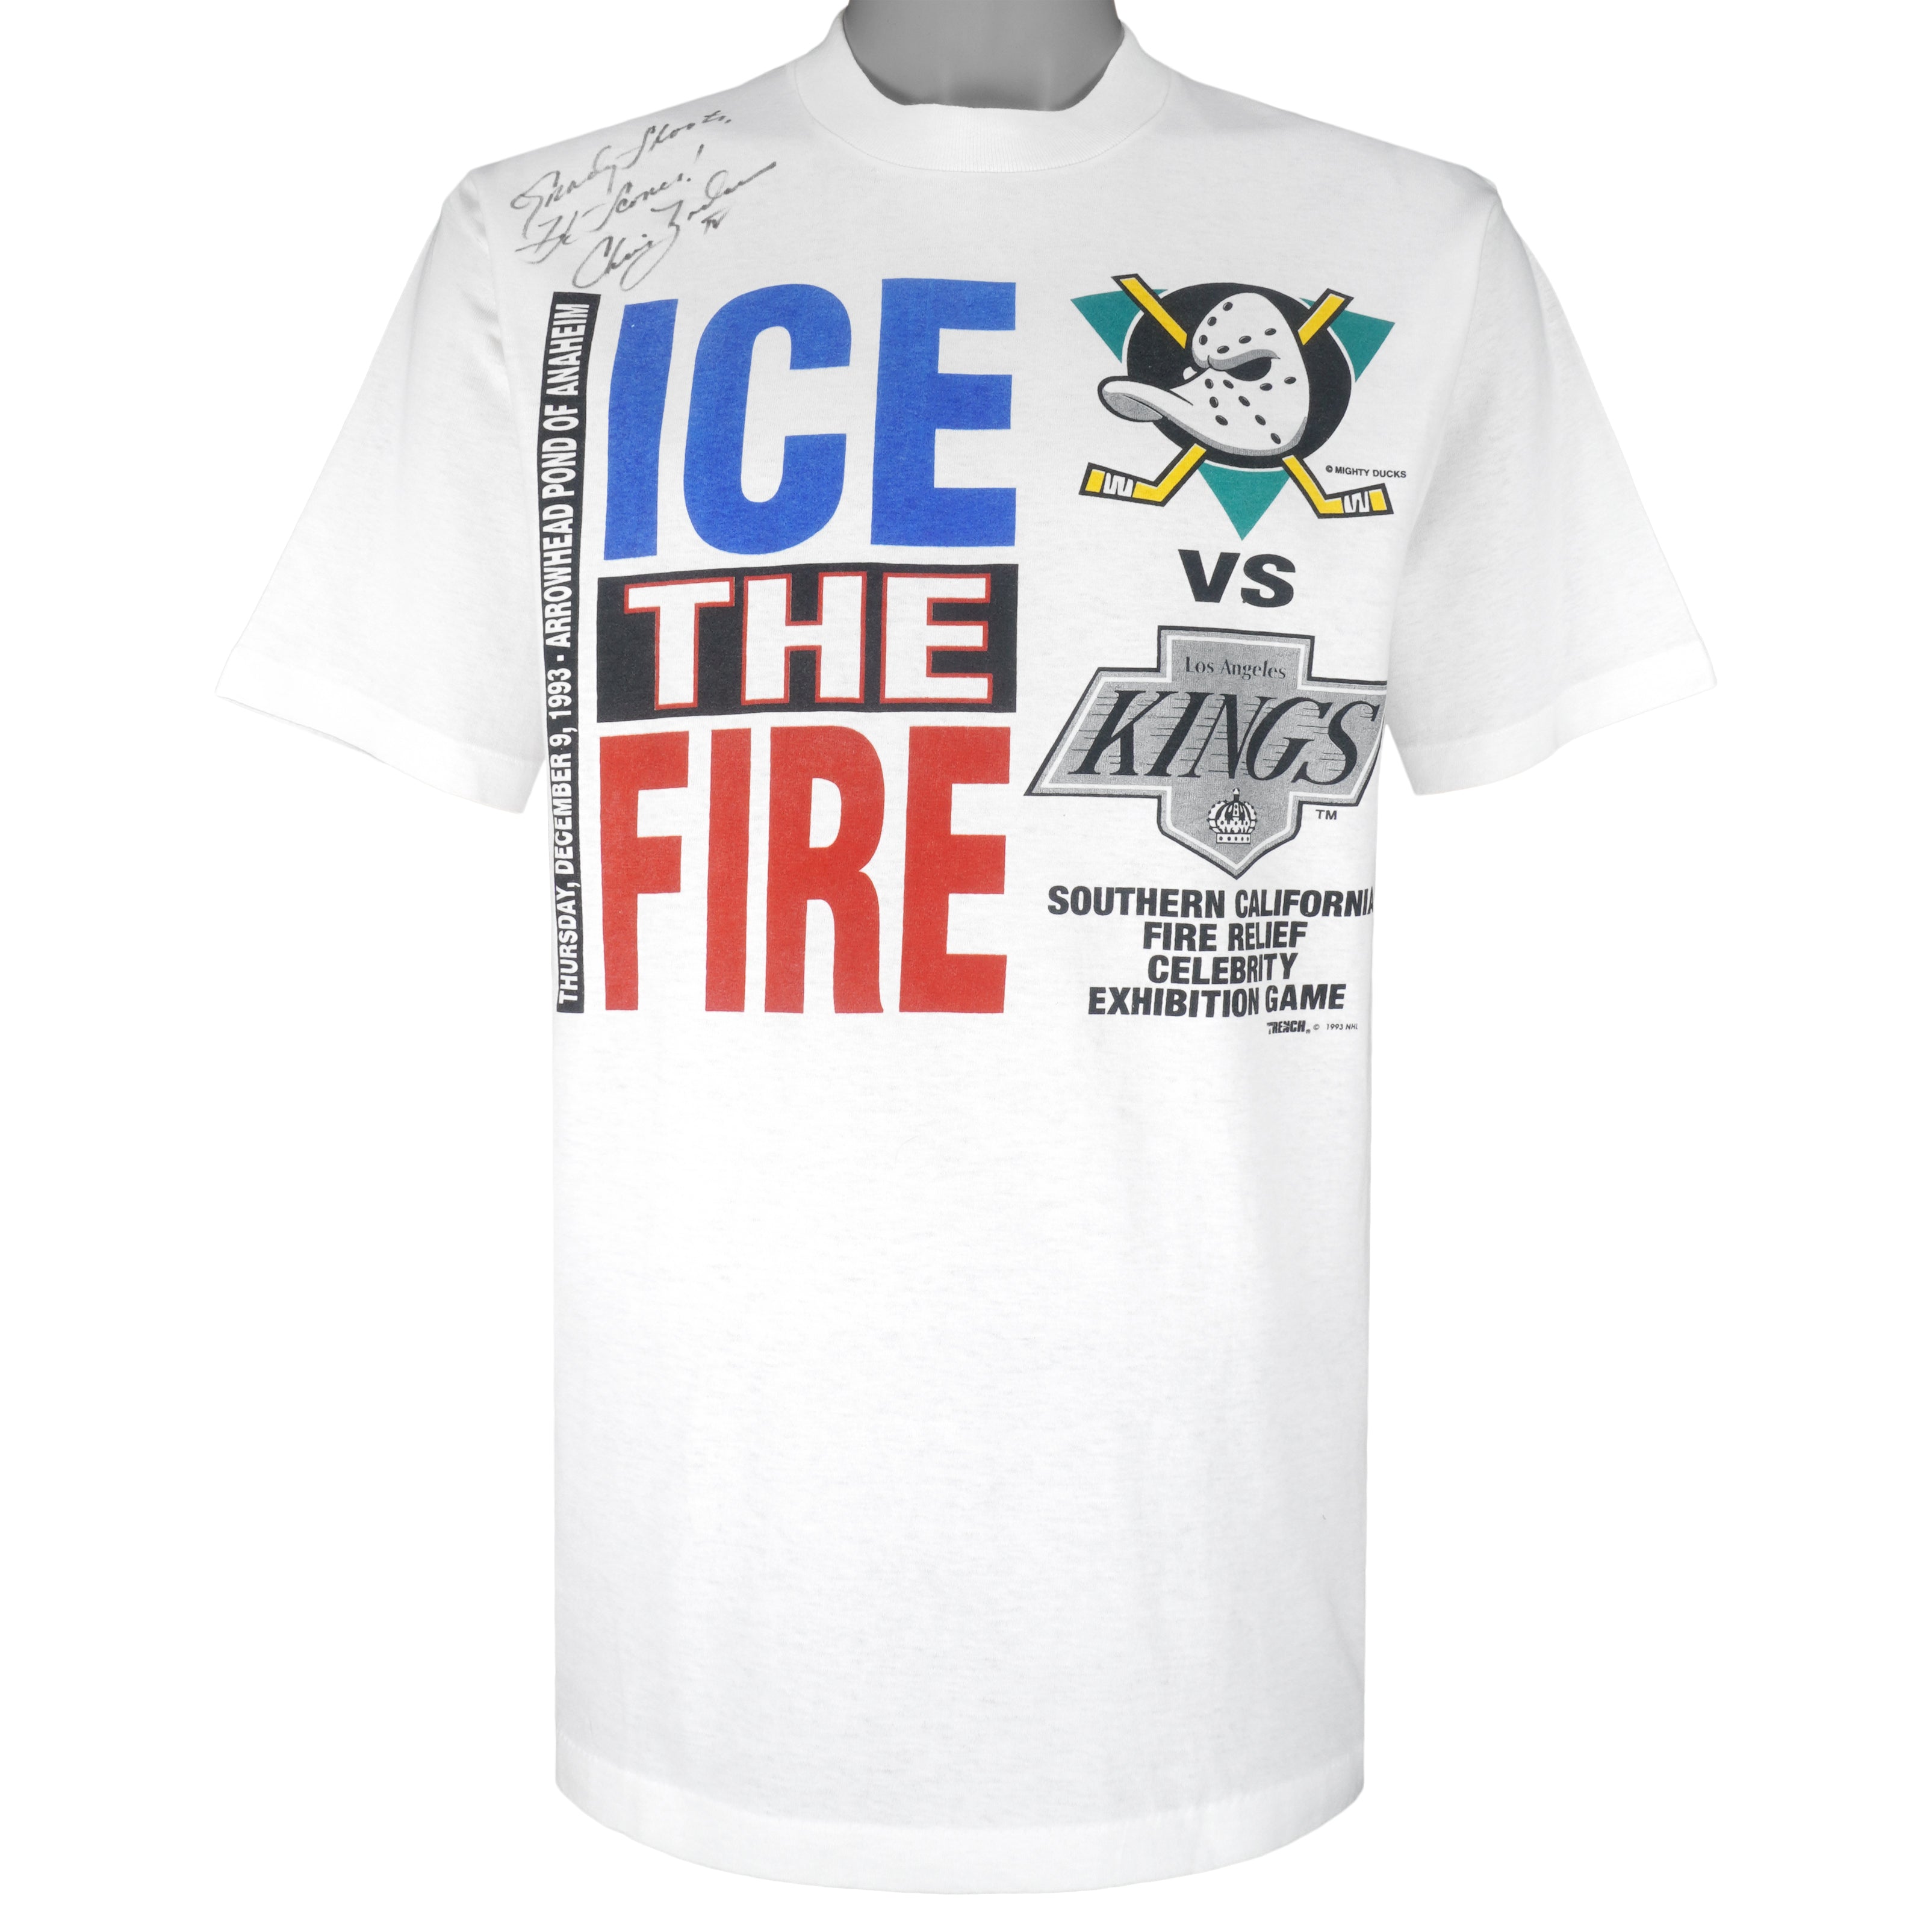 The Mighty Ducks NHL Hockey Colorful Design T-Shirt t-shirt